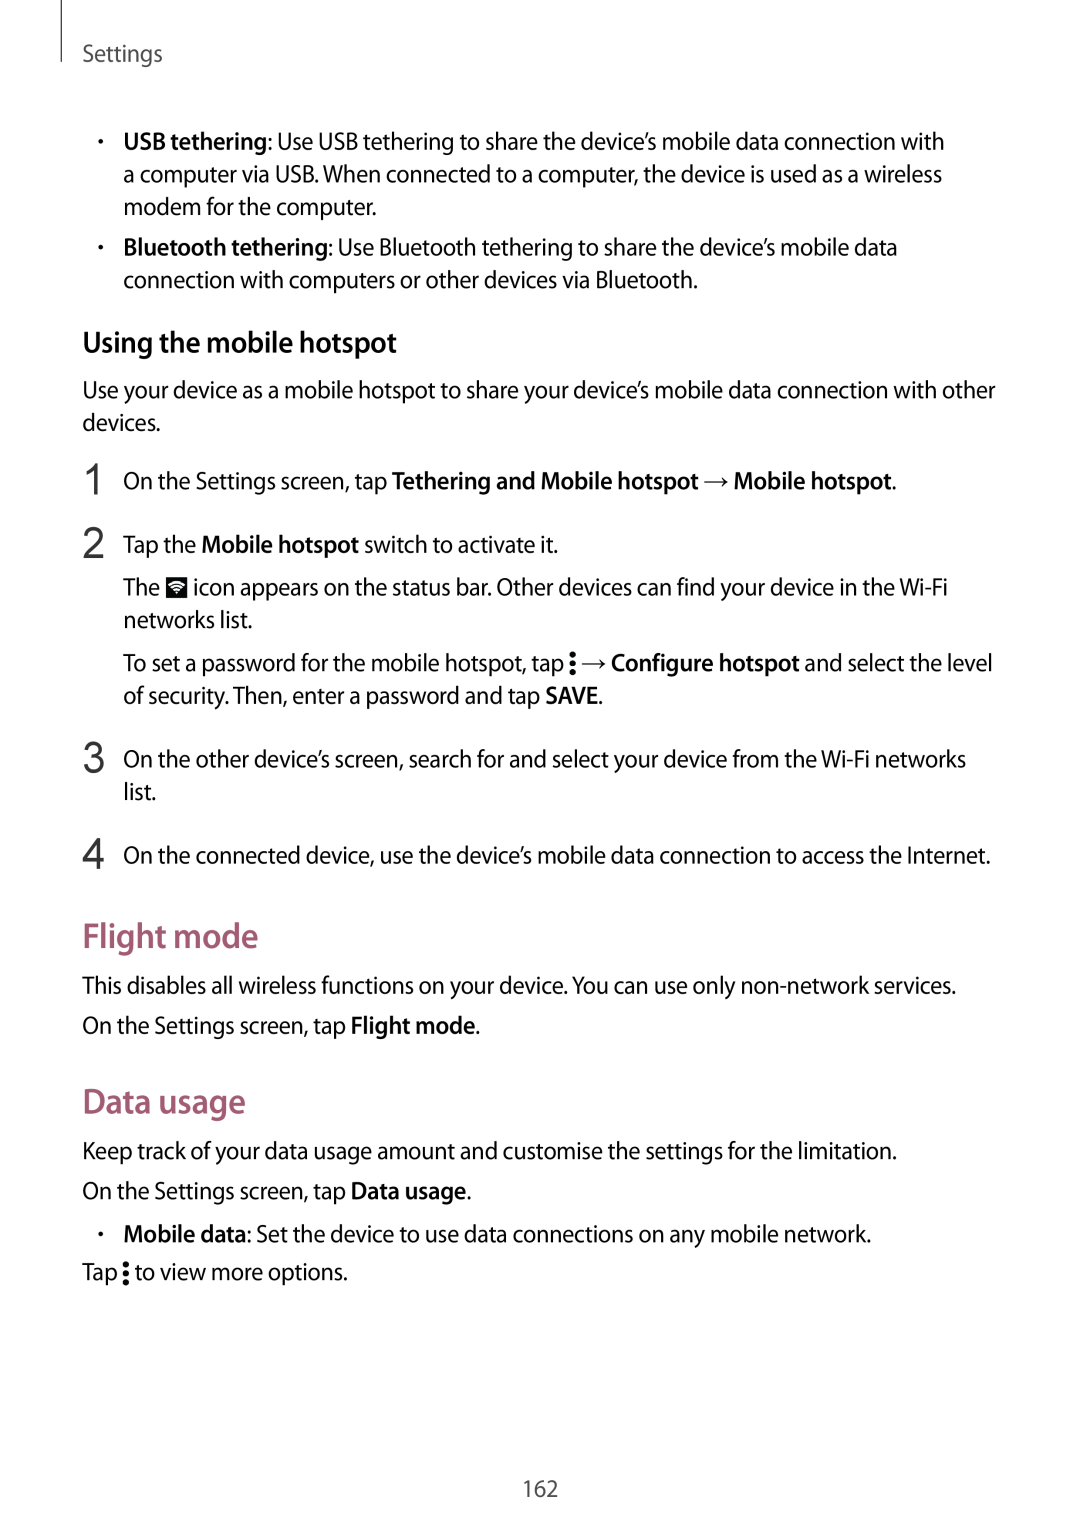 Samsung SM-N915FZWYATO, SM-N915FZWYEUR, SM-N915FZKYATO manual Flight mode, Data usage, Using the mobile hotspot, Settings 